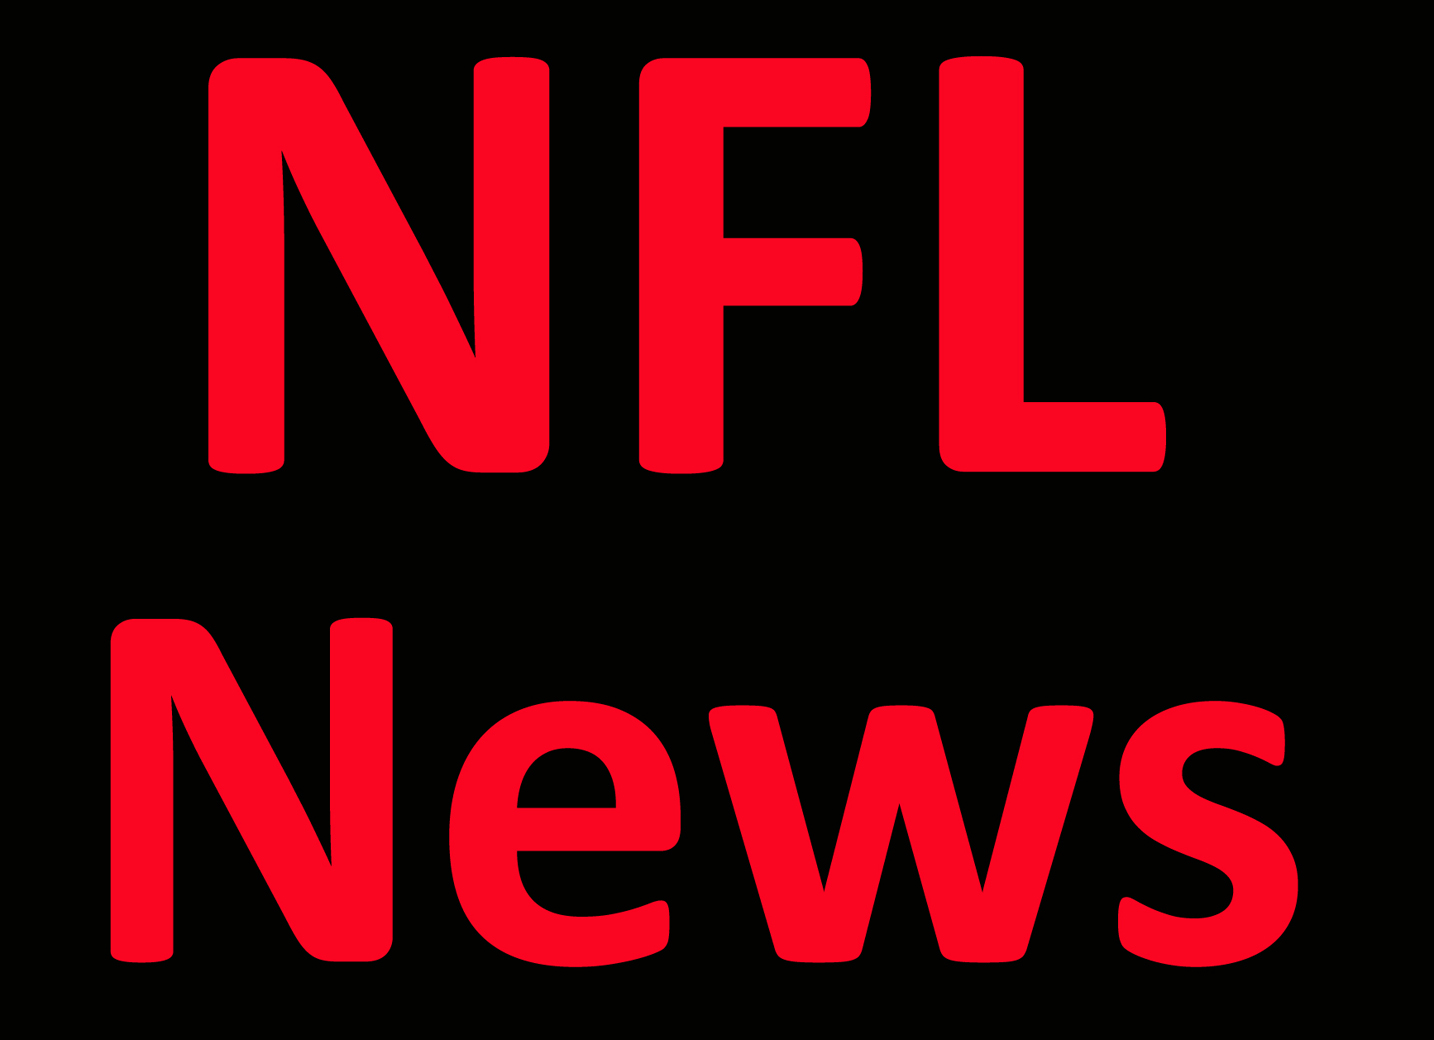 NFL News: Cam sidelined over protocol ‘misunderstanding’ Per Report